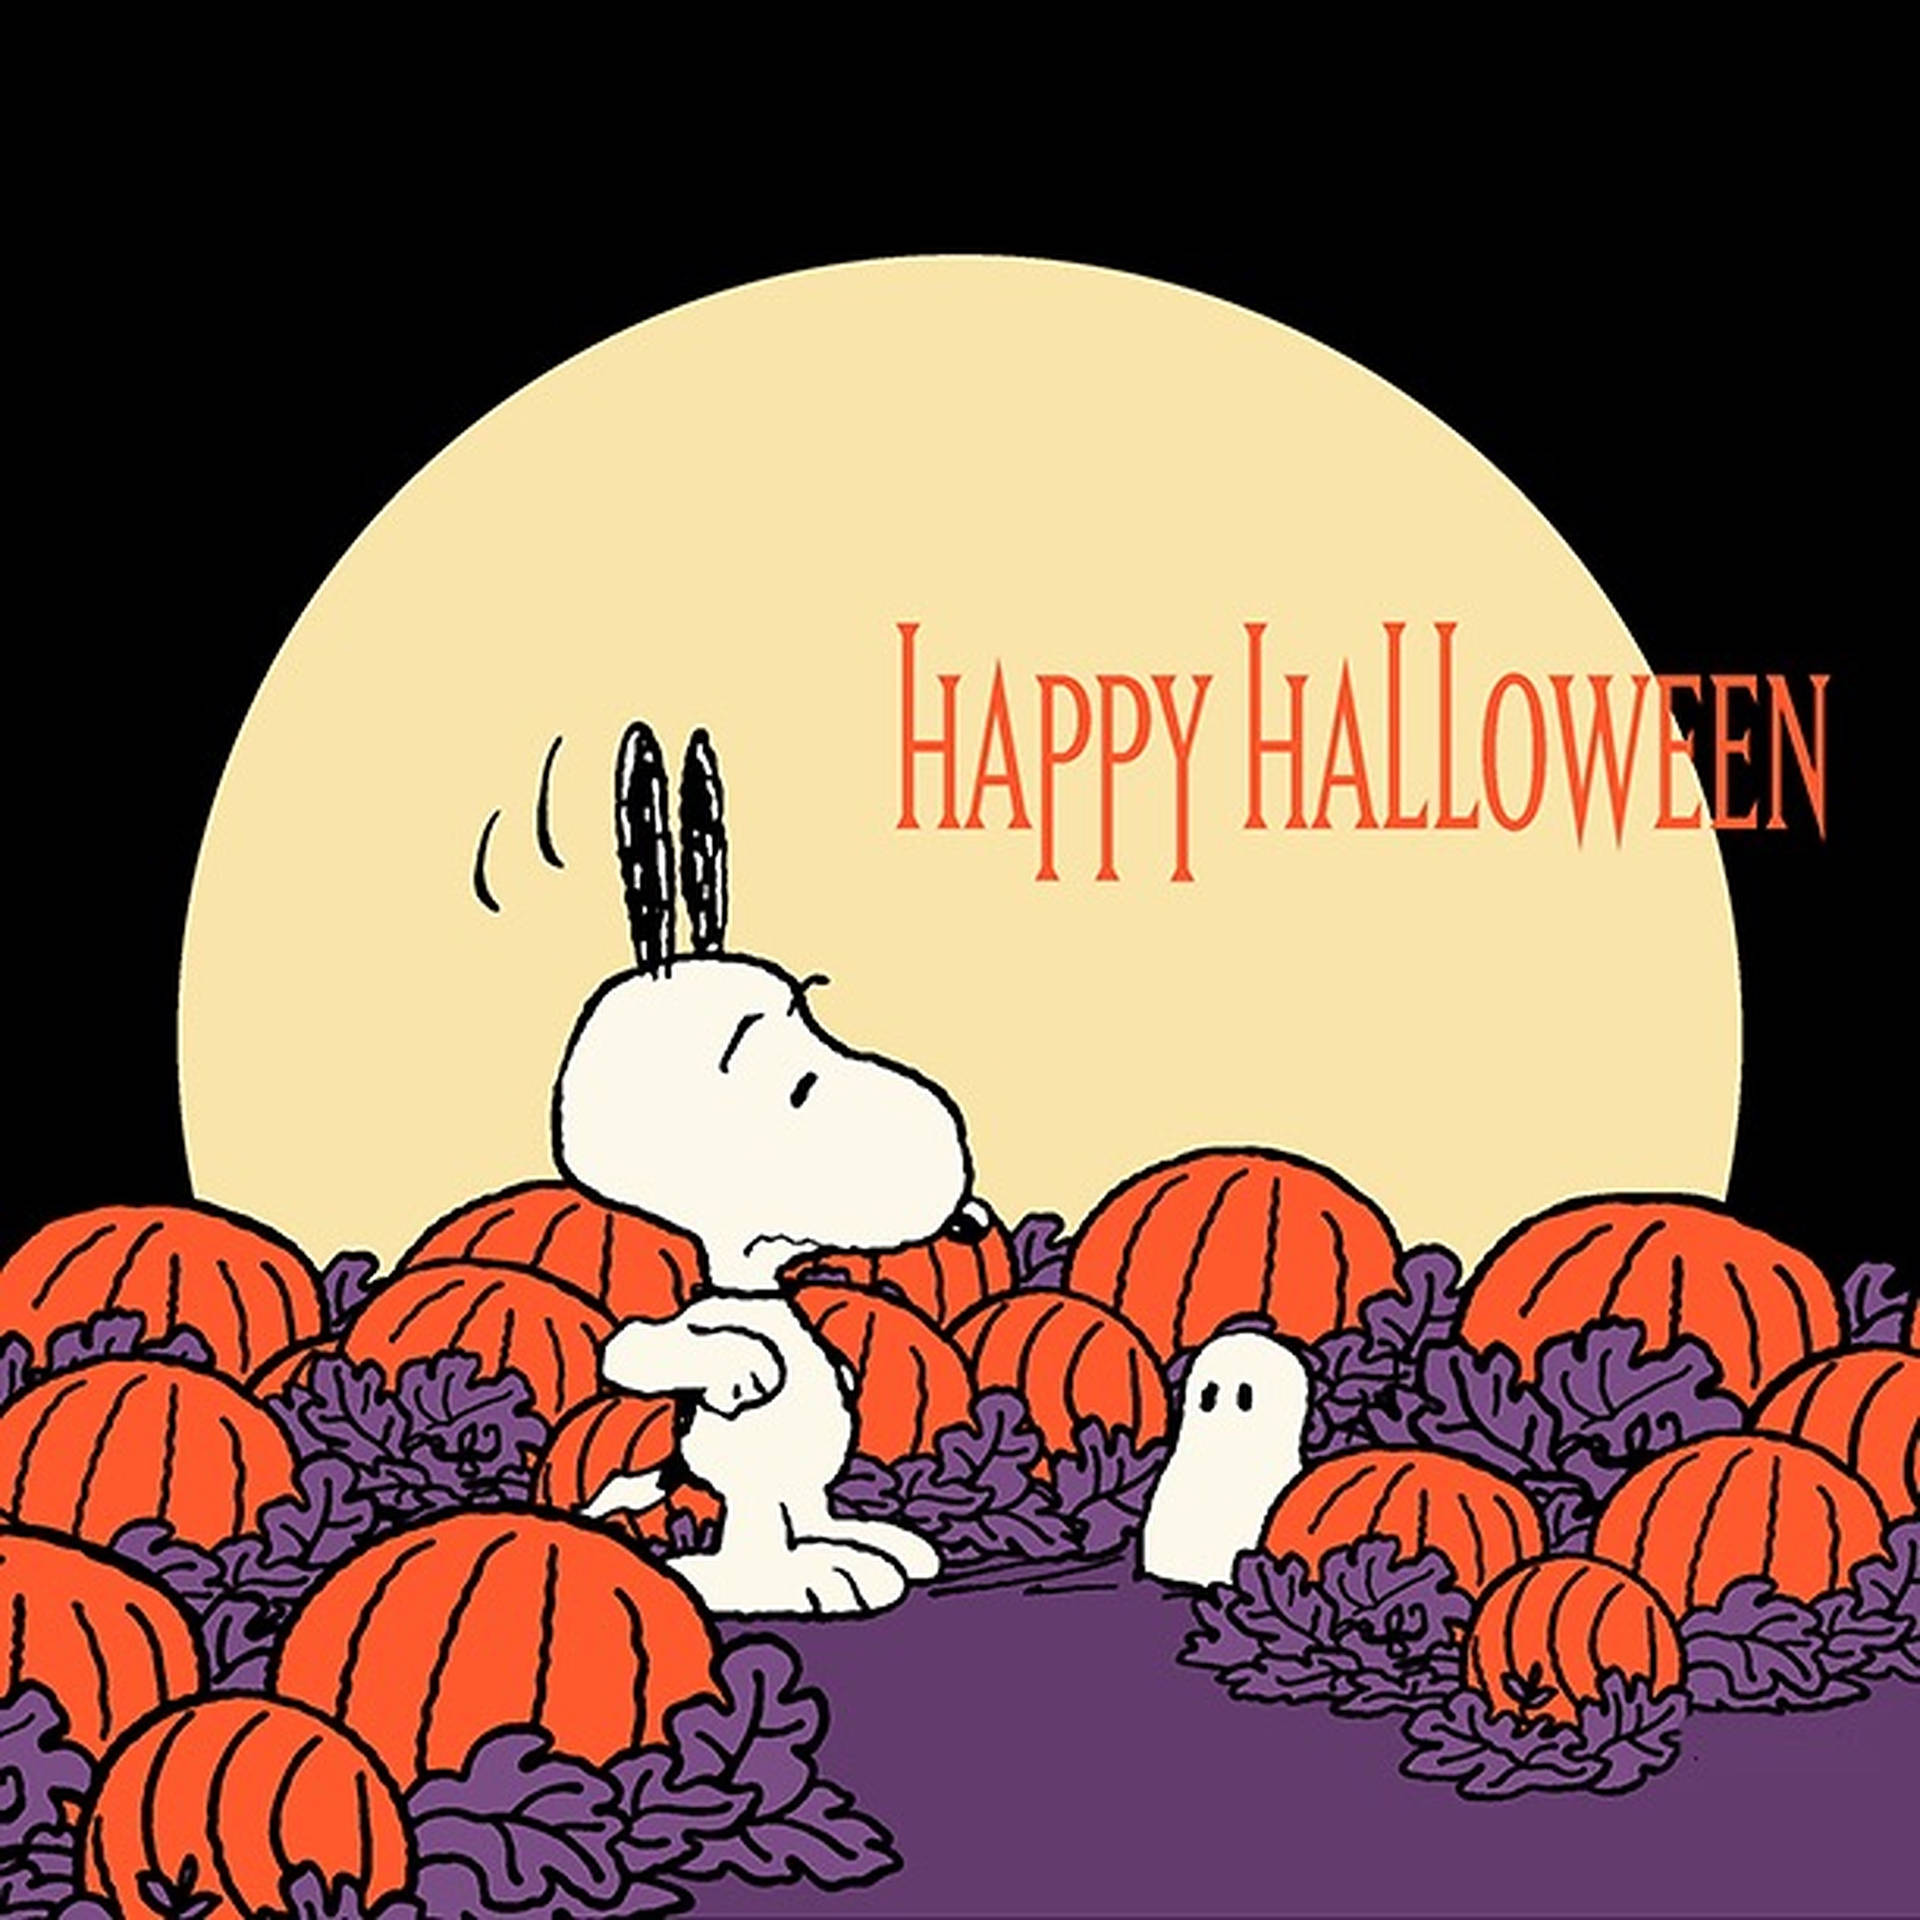 Charlie Brown Halloween Snoopy Vector Art